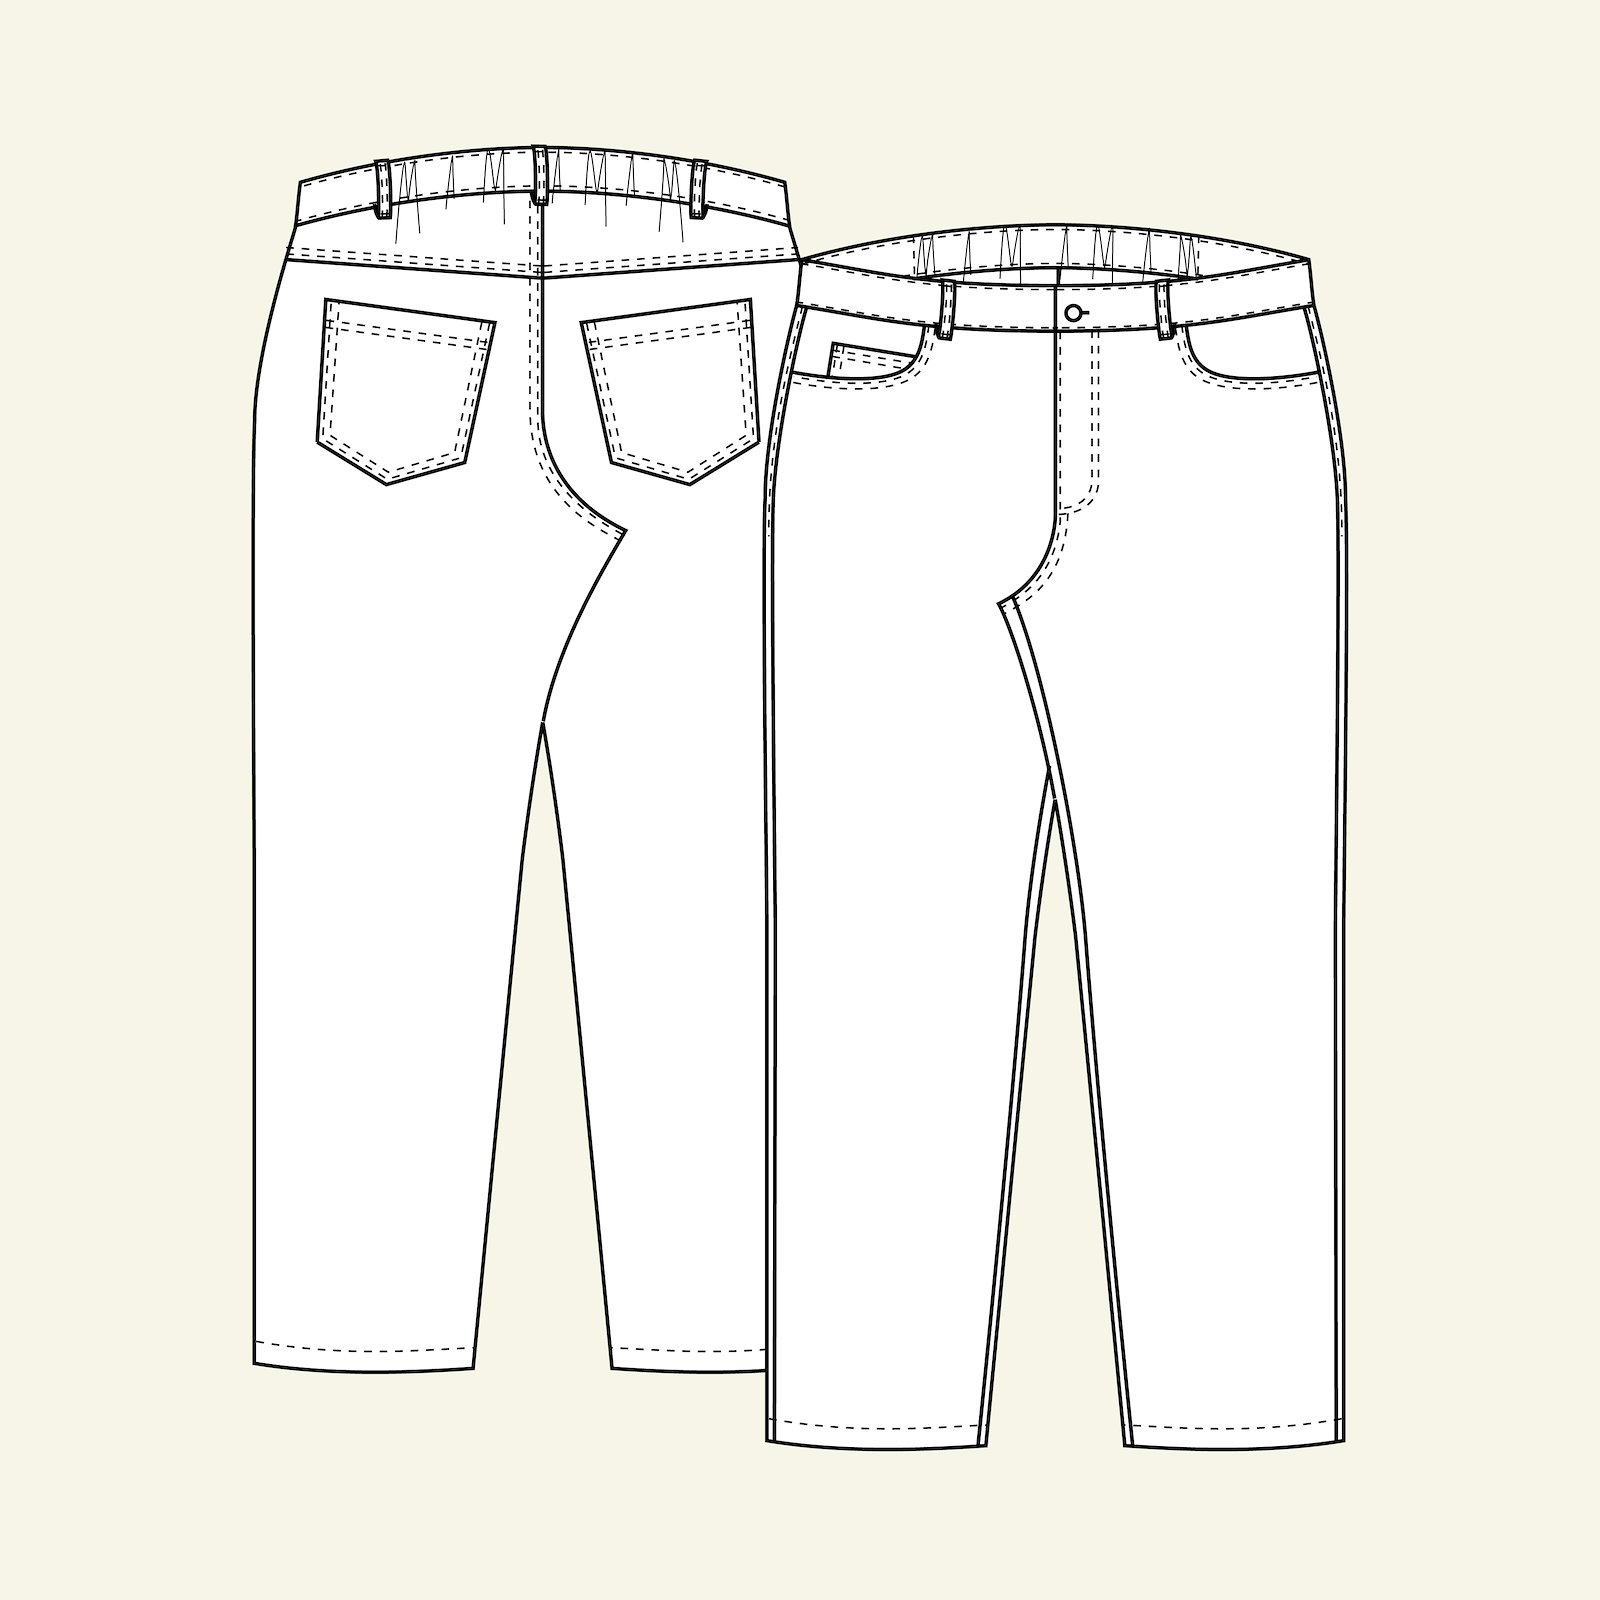 Klassisch Jeans mit Gummiband hinter, 52 p70007000_p70007001_p70007002_p70007003_p70007004_pack_b